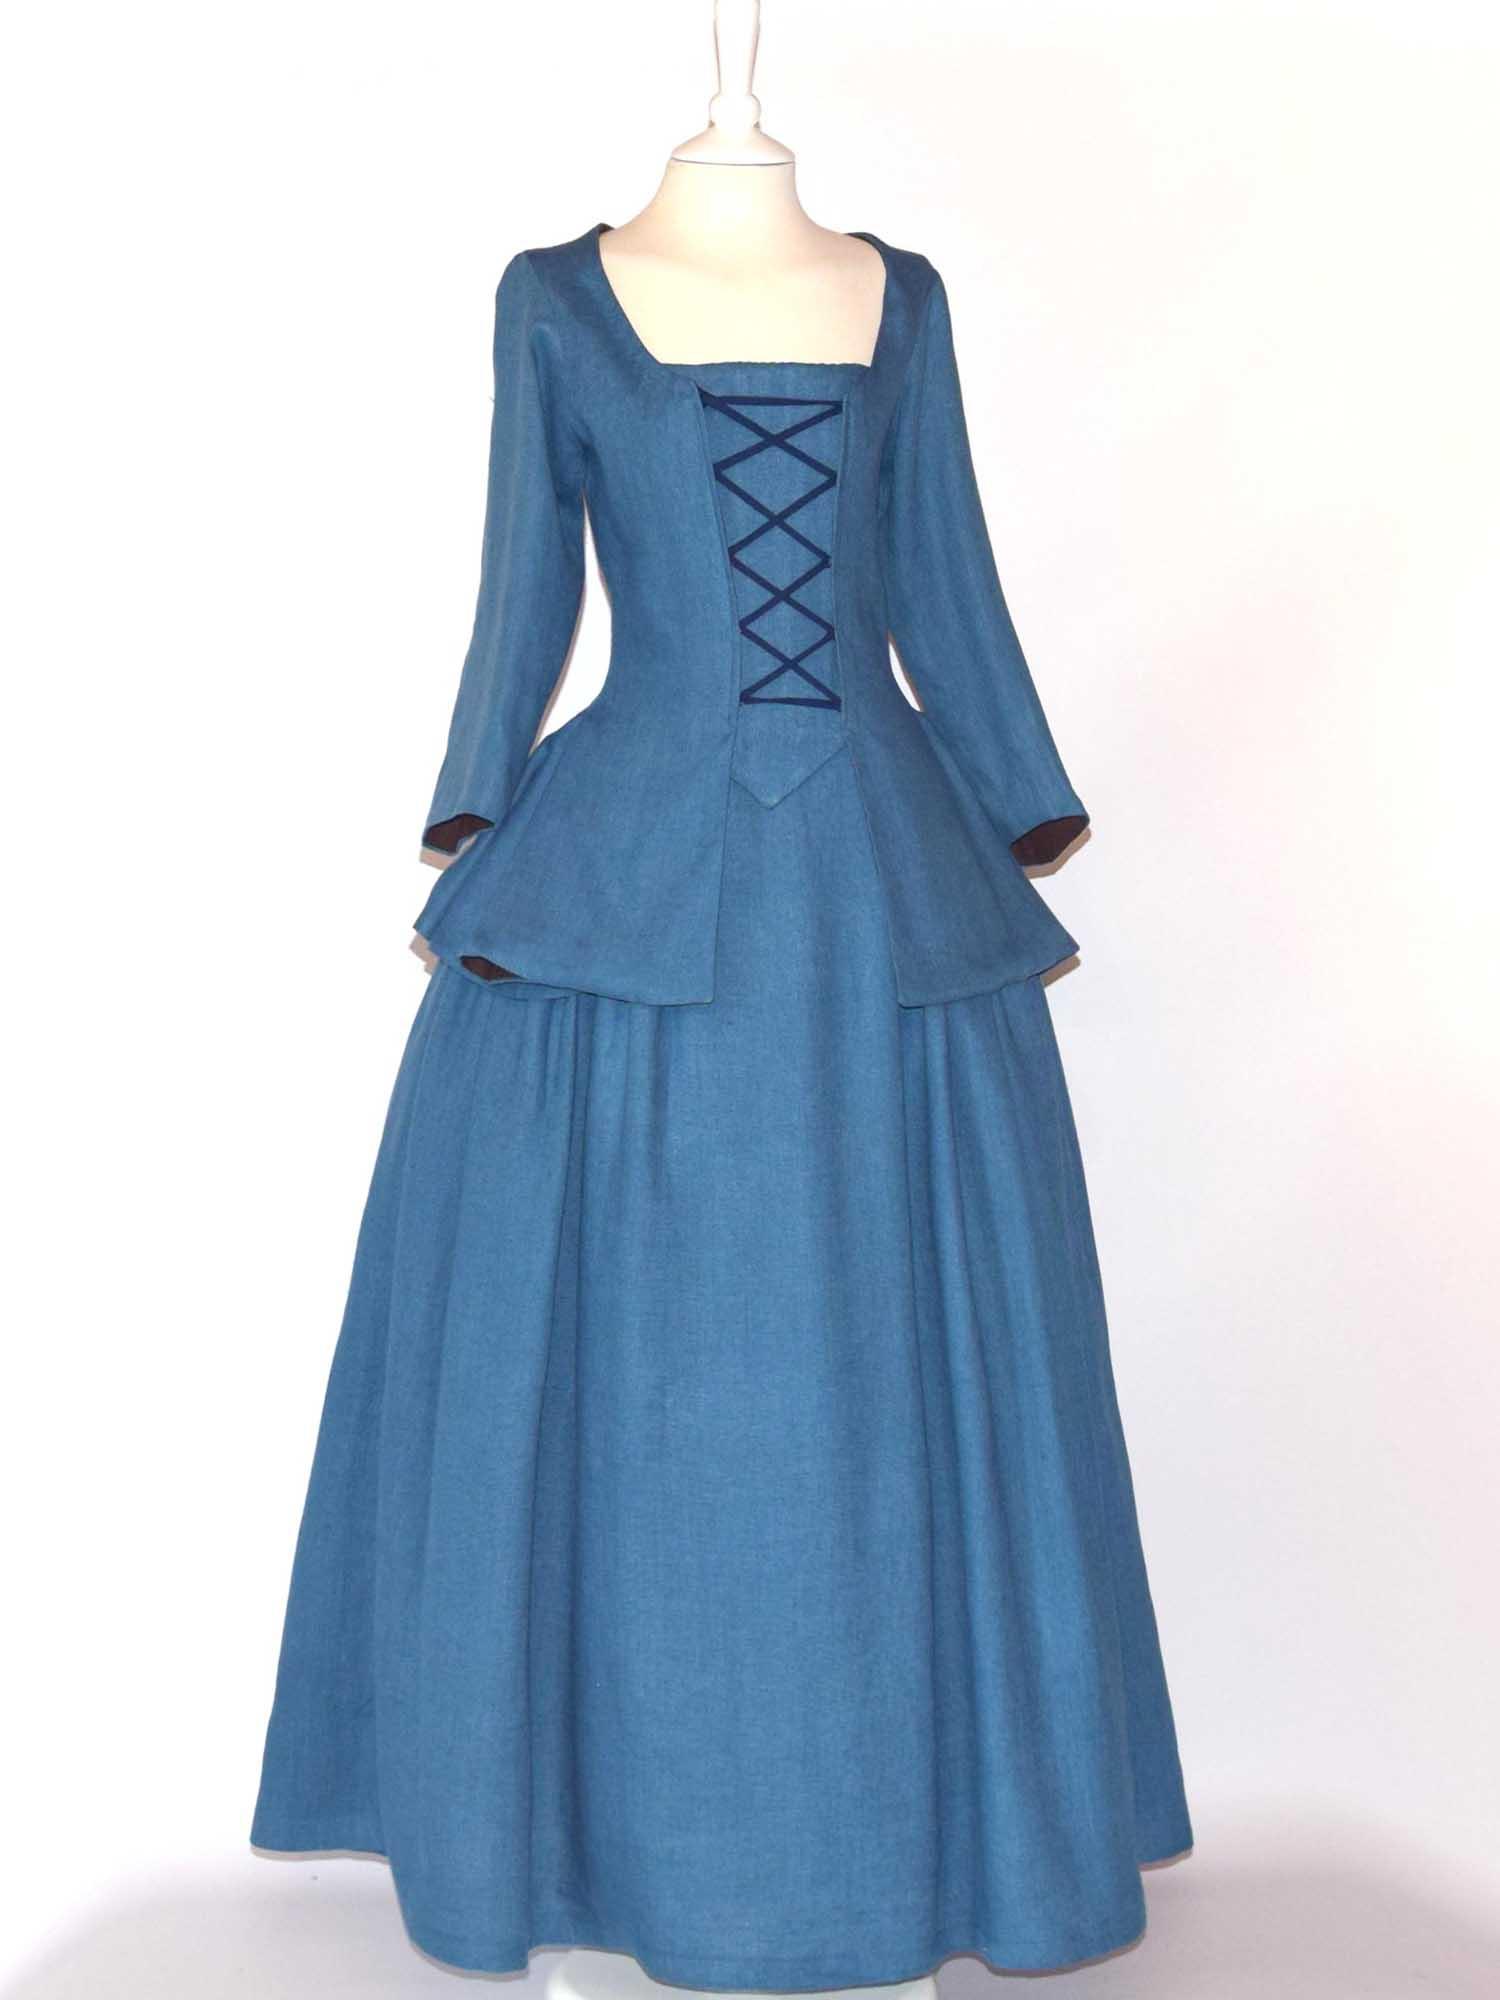 JANET, Colonial Costume in Steel Blue Linen - Atelier Serraspina - Costume 18ème siècle en lin bleu acier